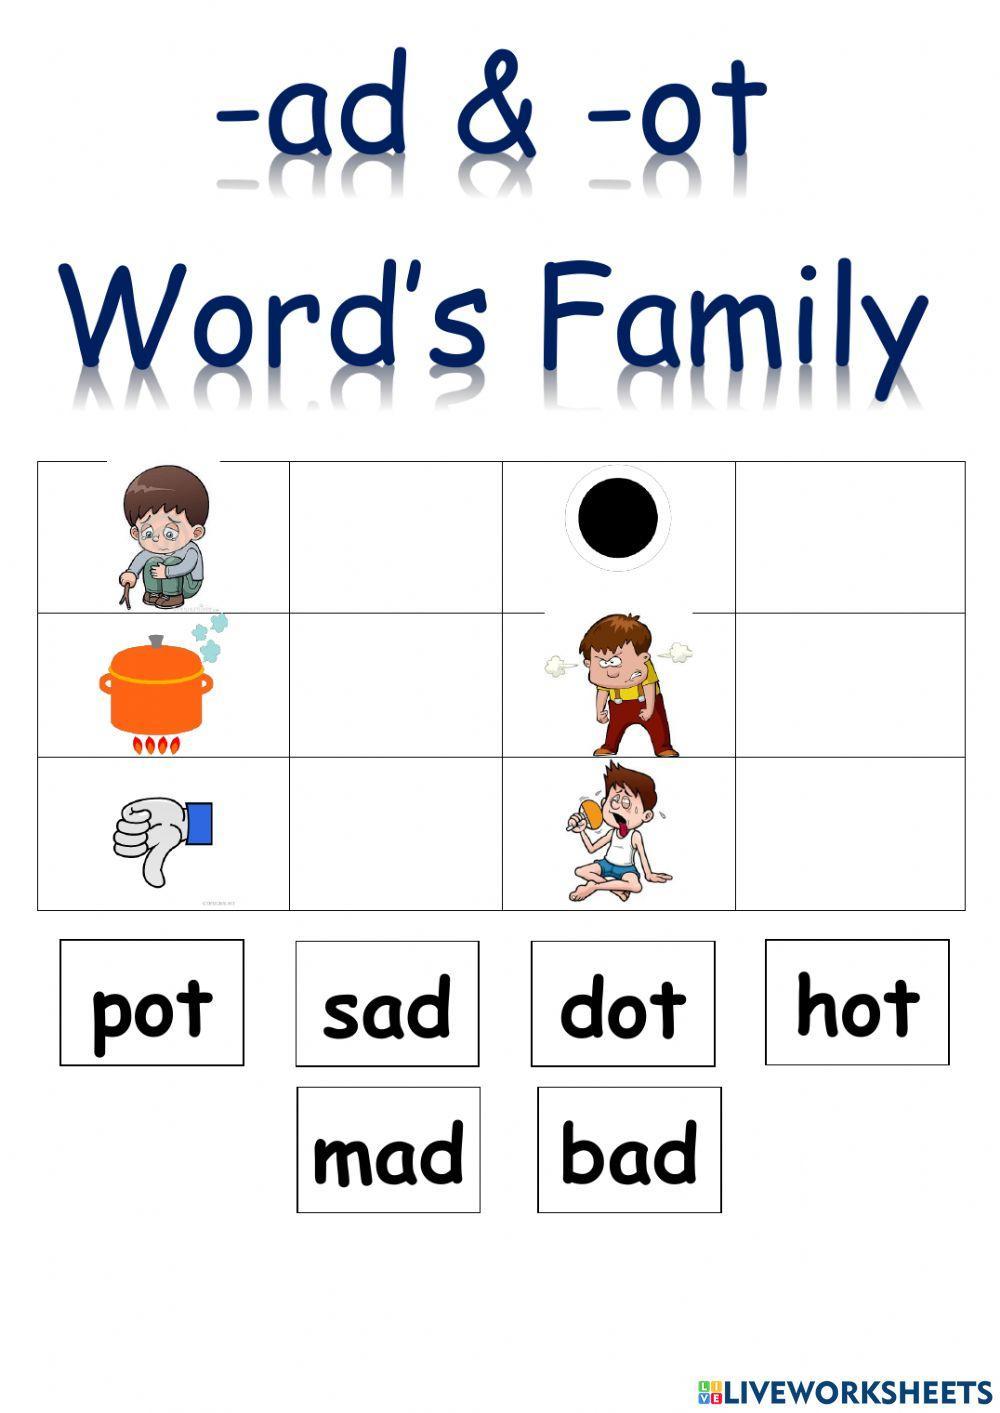 -ad & -ot word's family